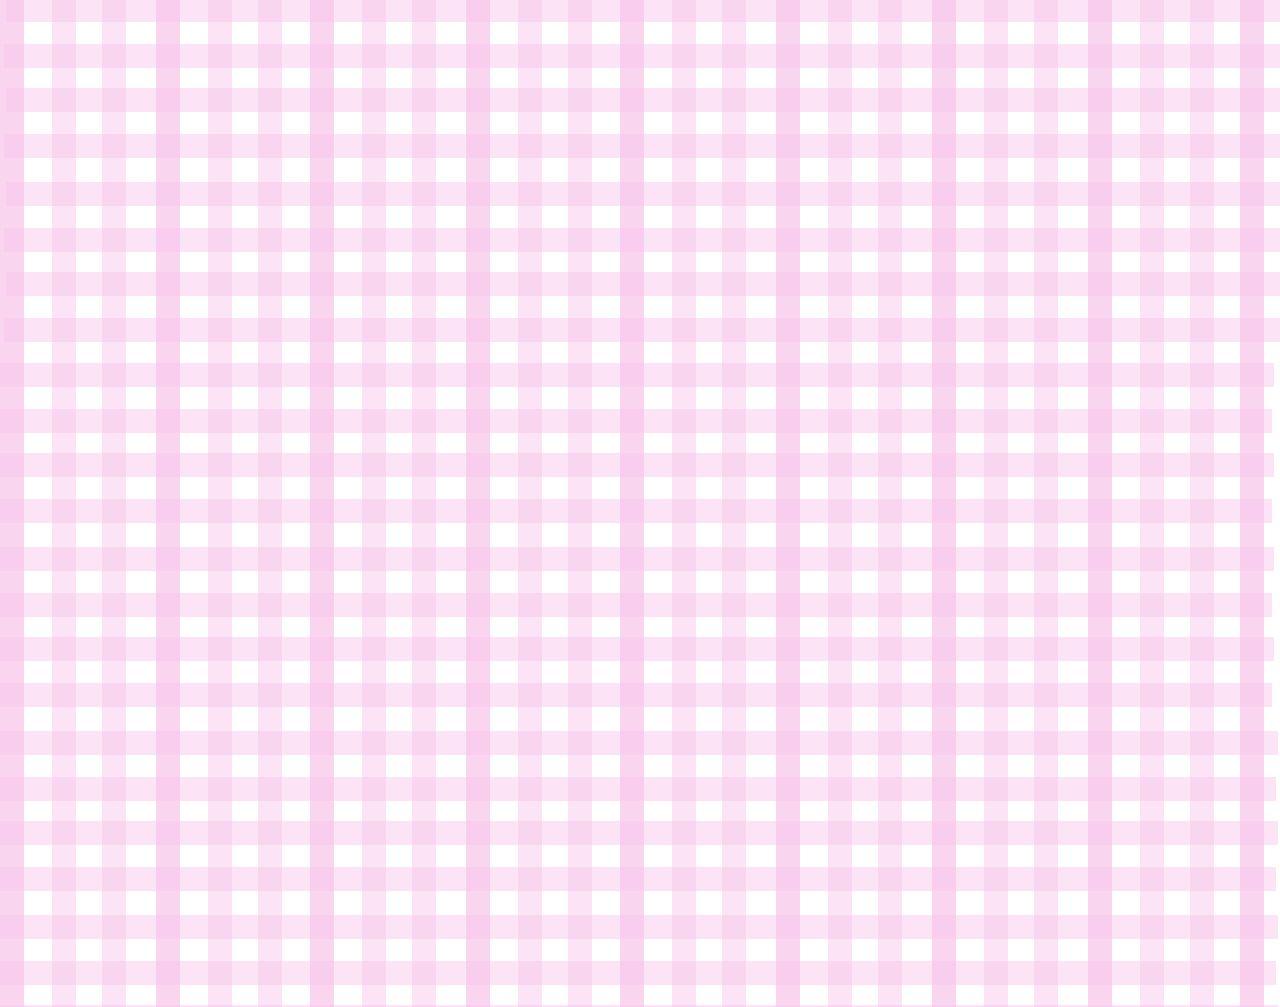 baby pink wallpaper